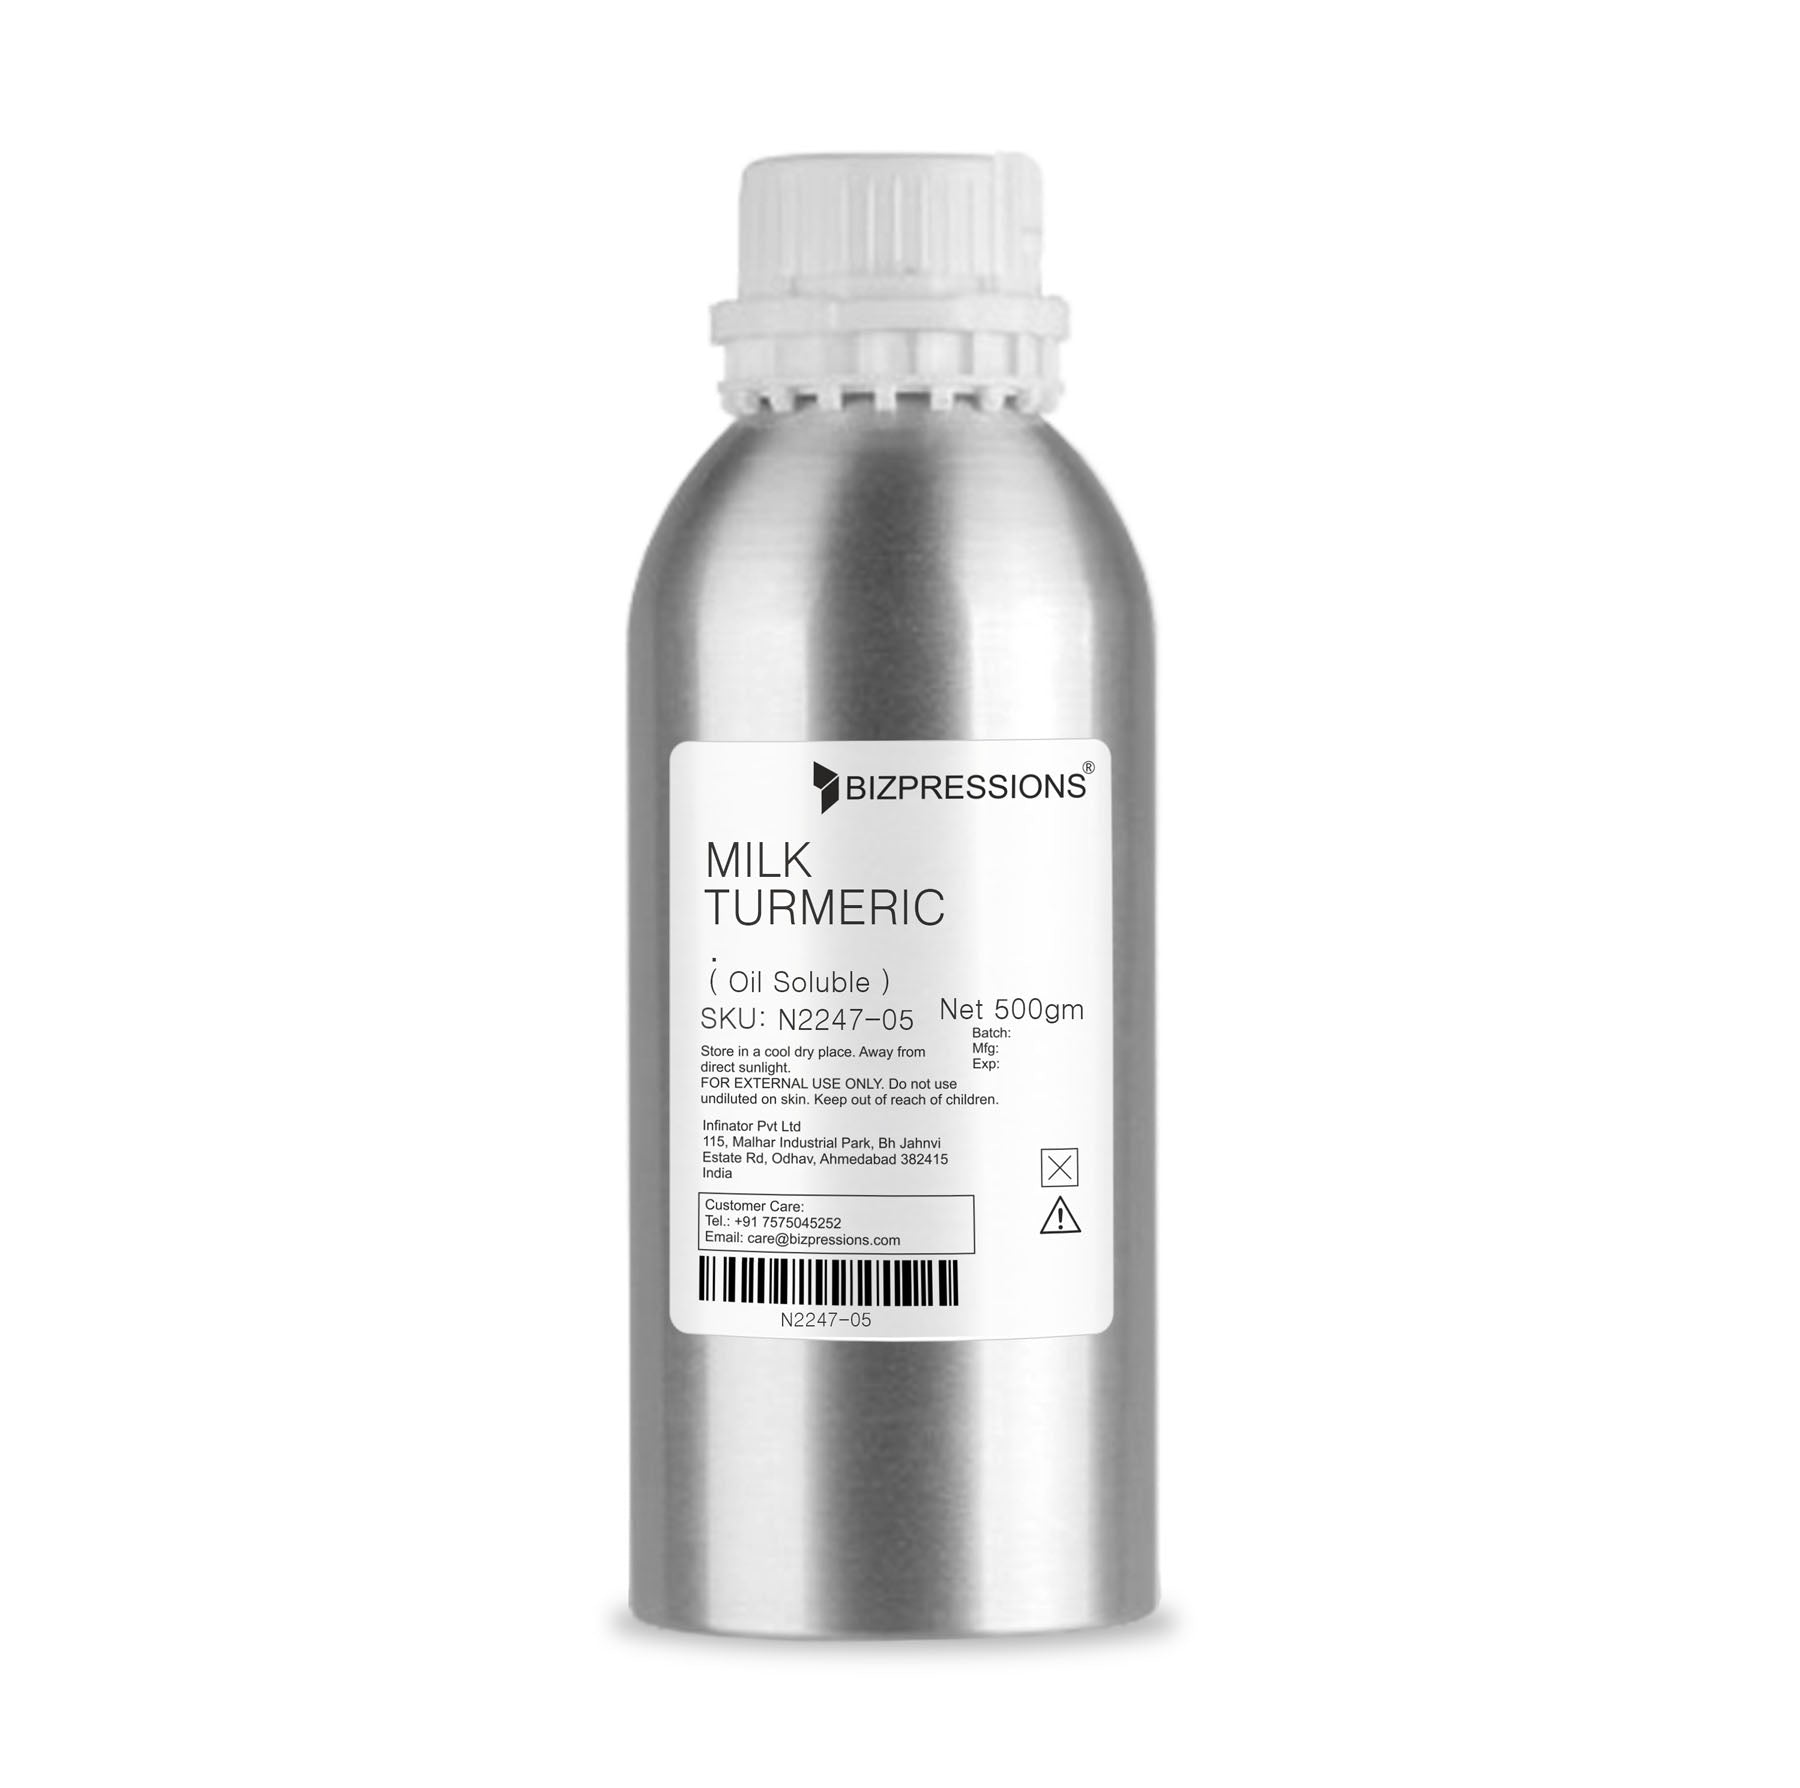 MILK TURMERIC - Fragrance ( Oil Soluble ) - 500 gm